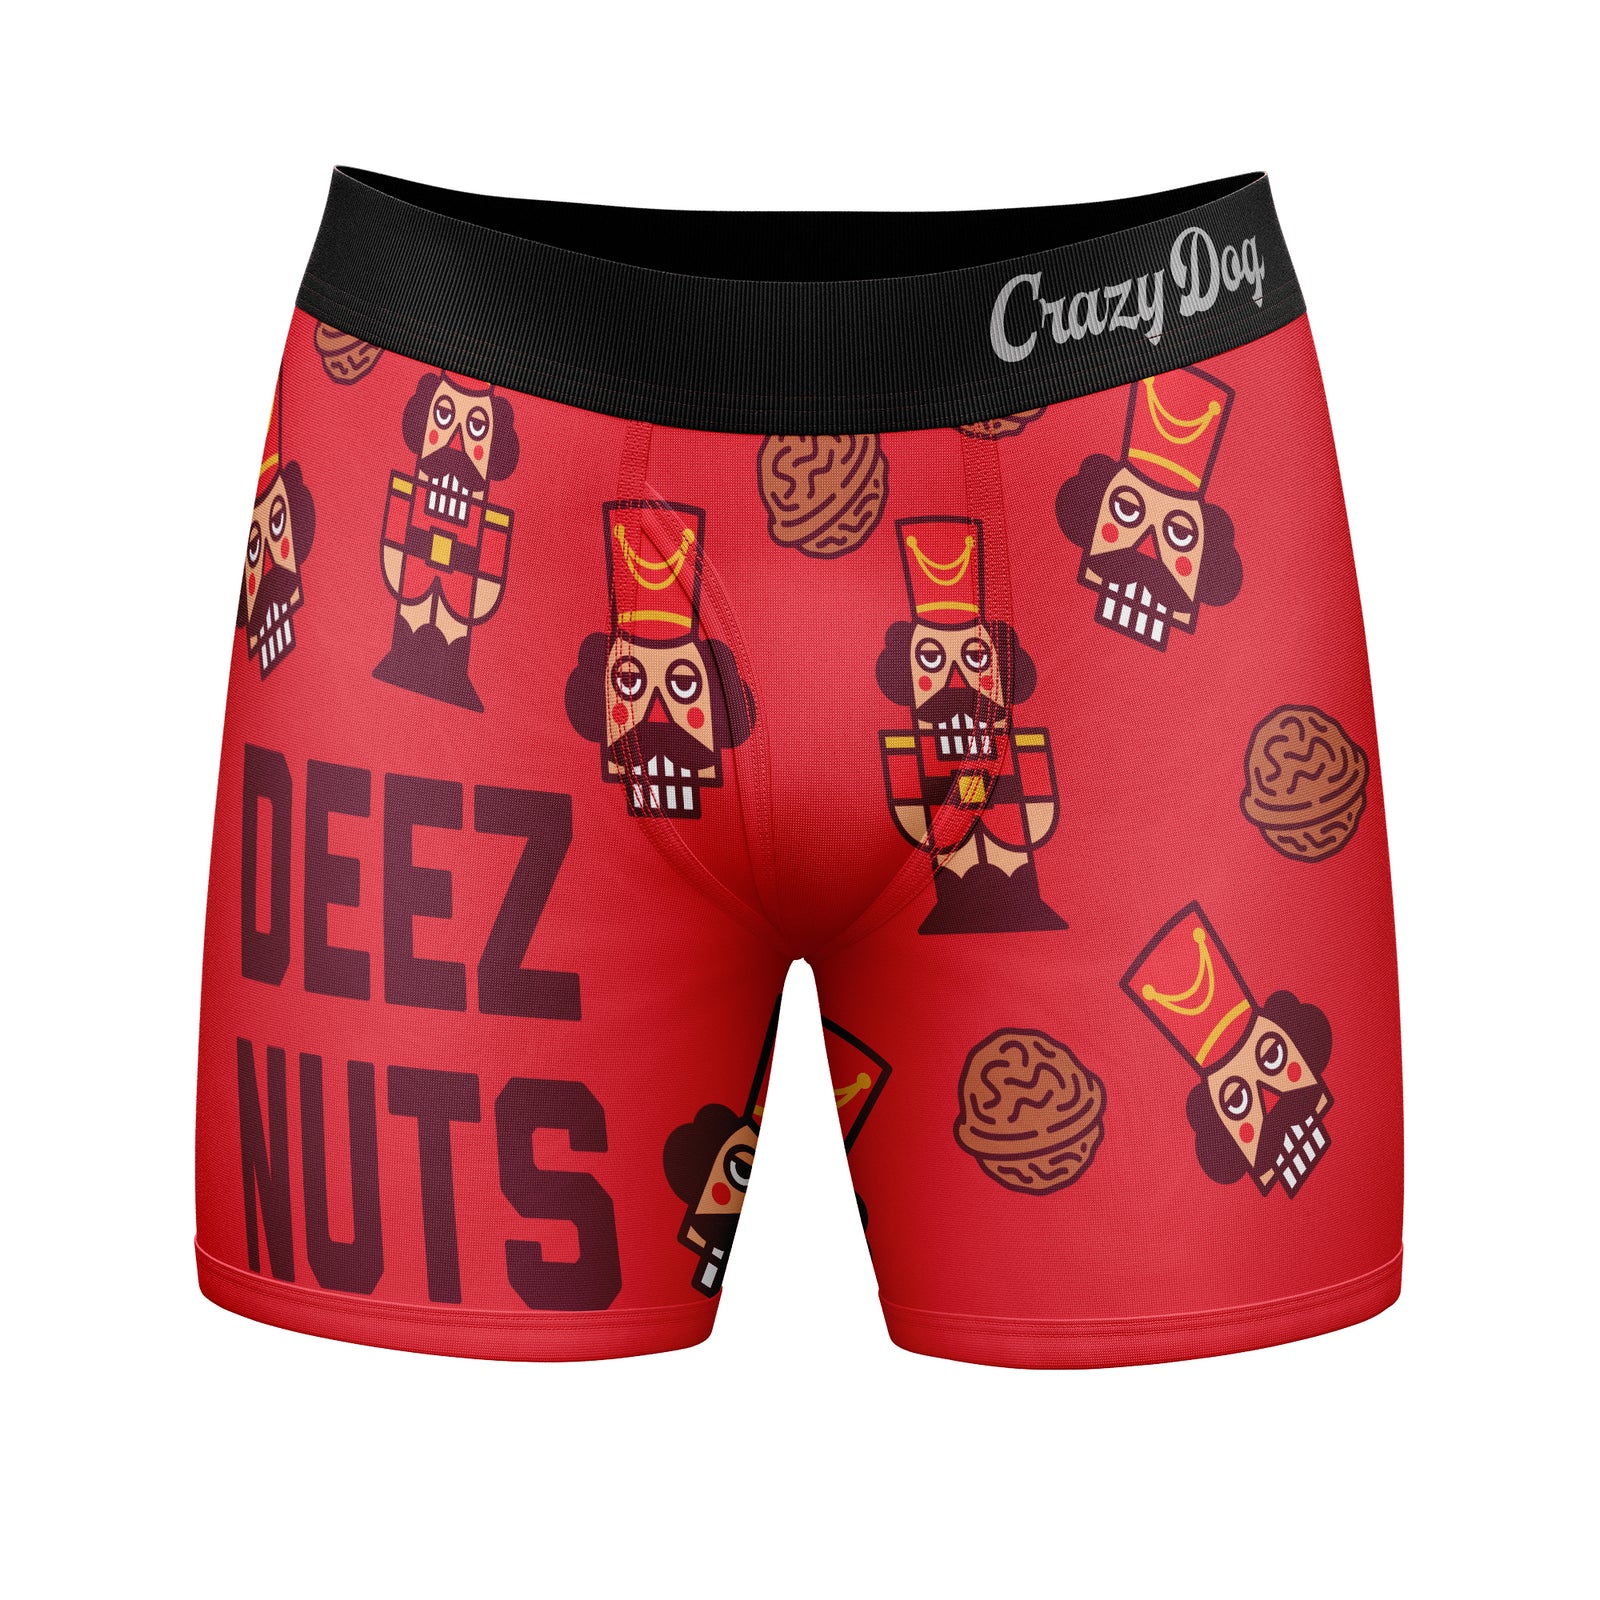 Crazy Boxer, Underwear & Socks